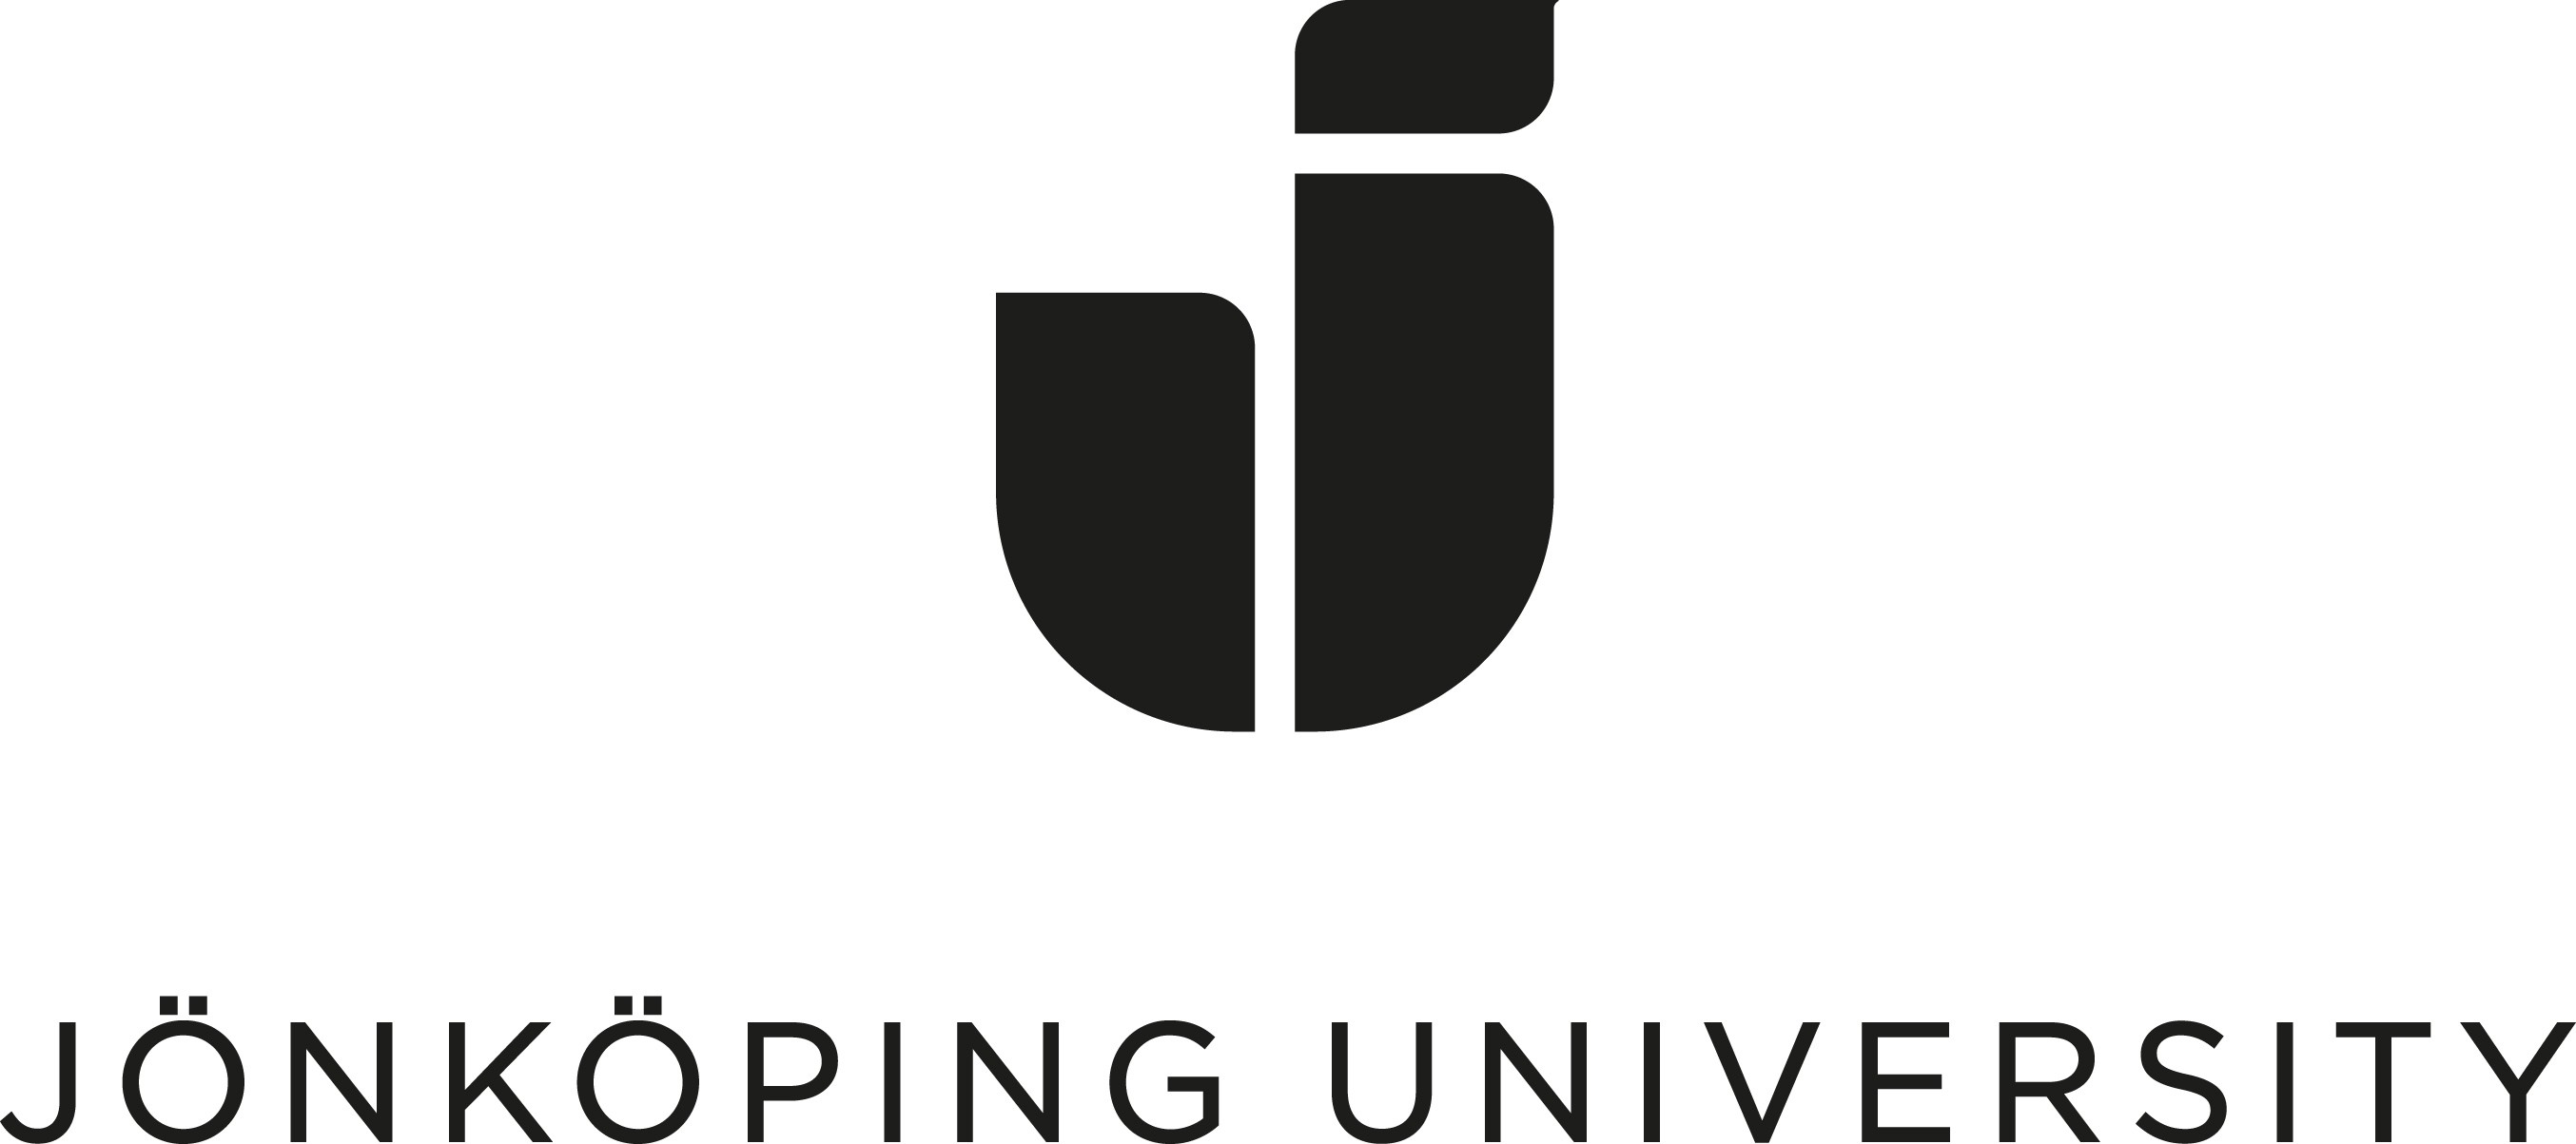 jonkoping university logo